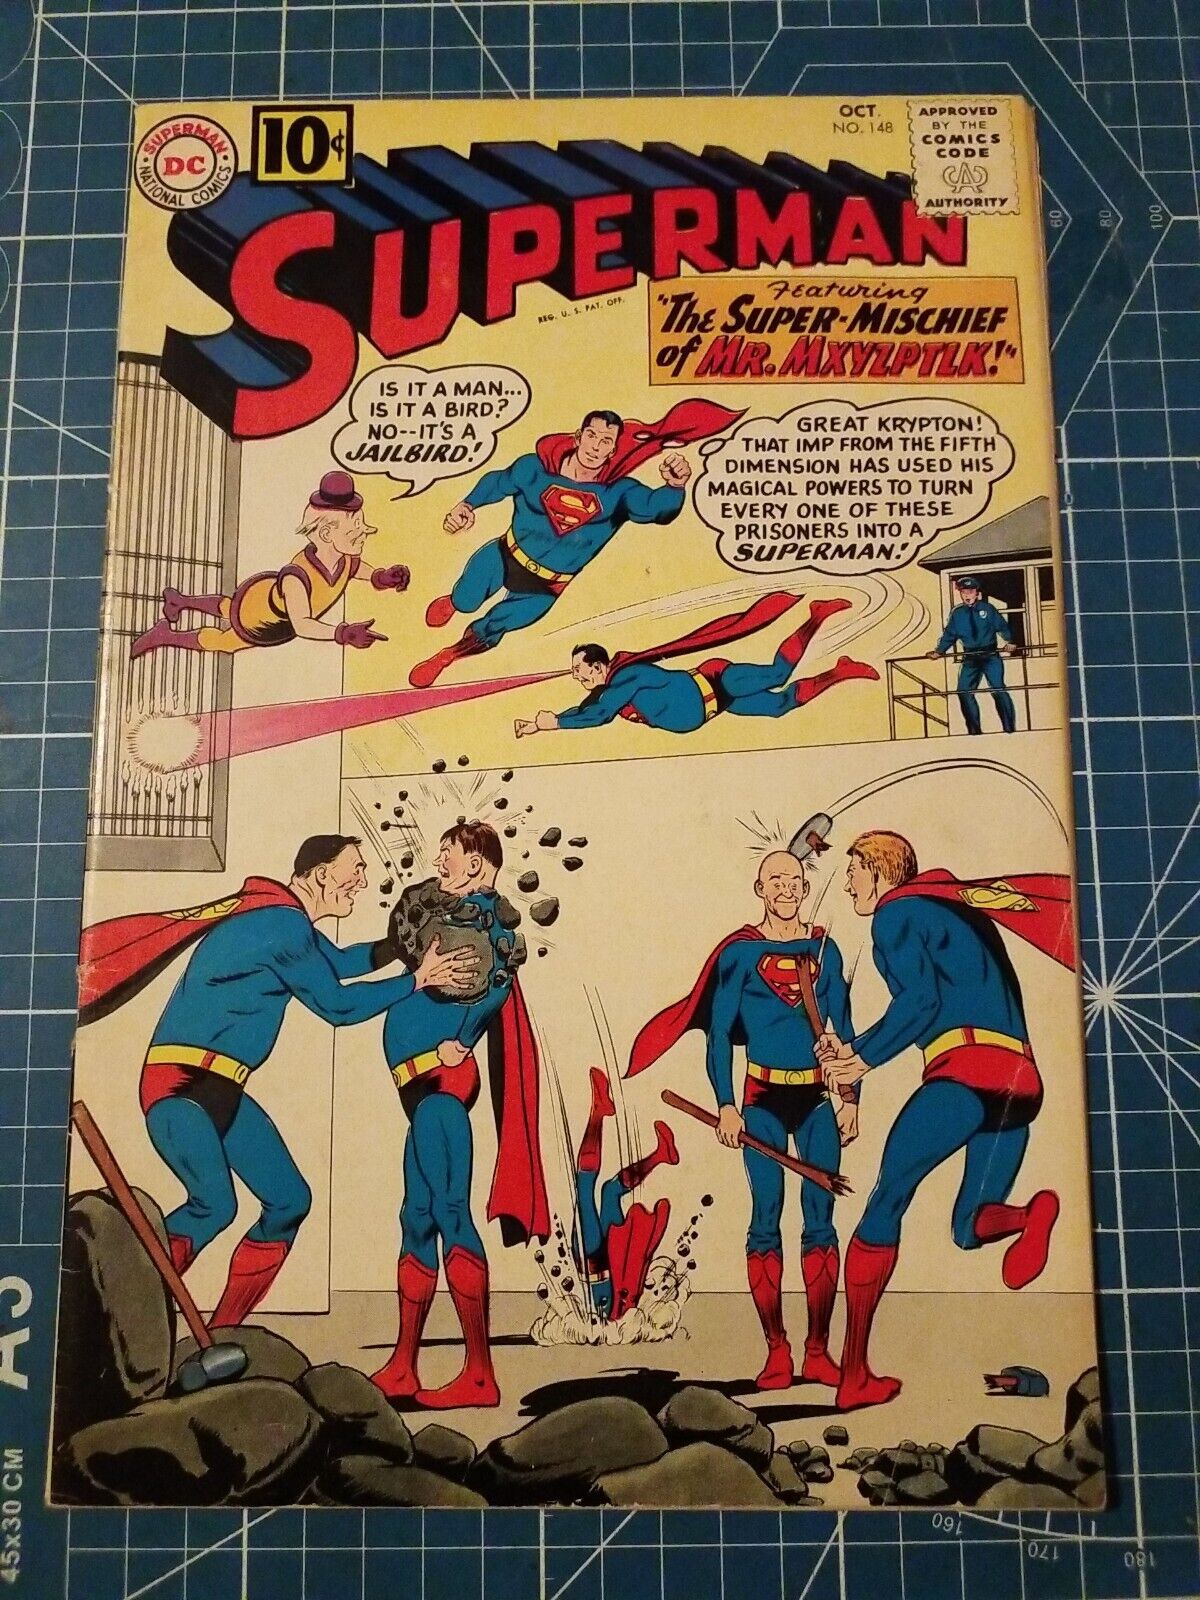 1961 DC Comics SUPERMAN No. 148 Super Mischief of Mr. Mxyzptlk Silver Age